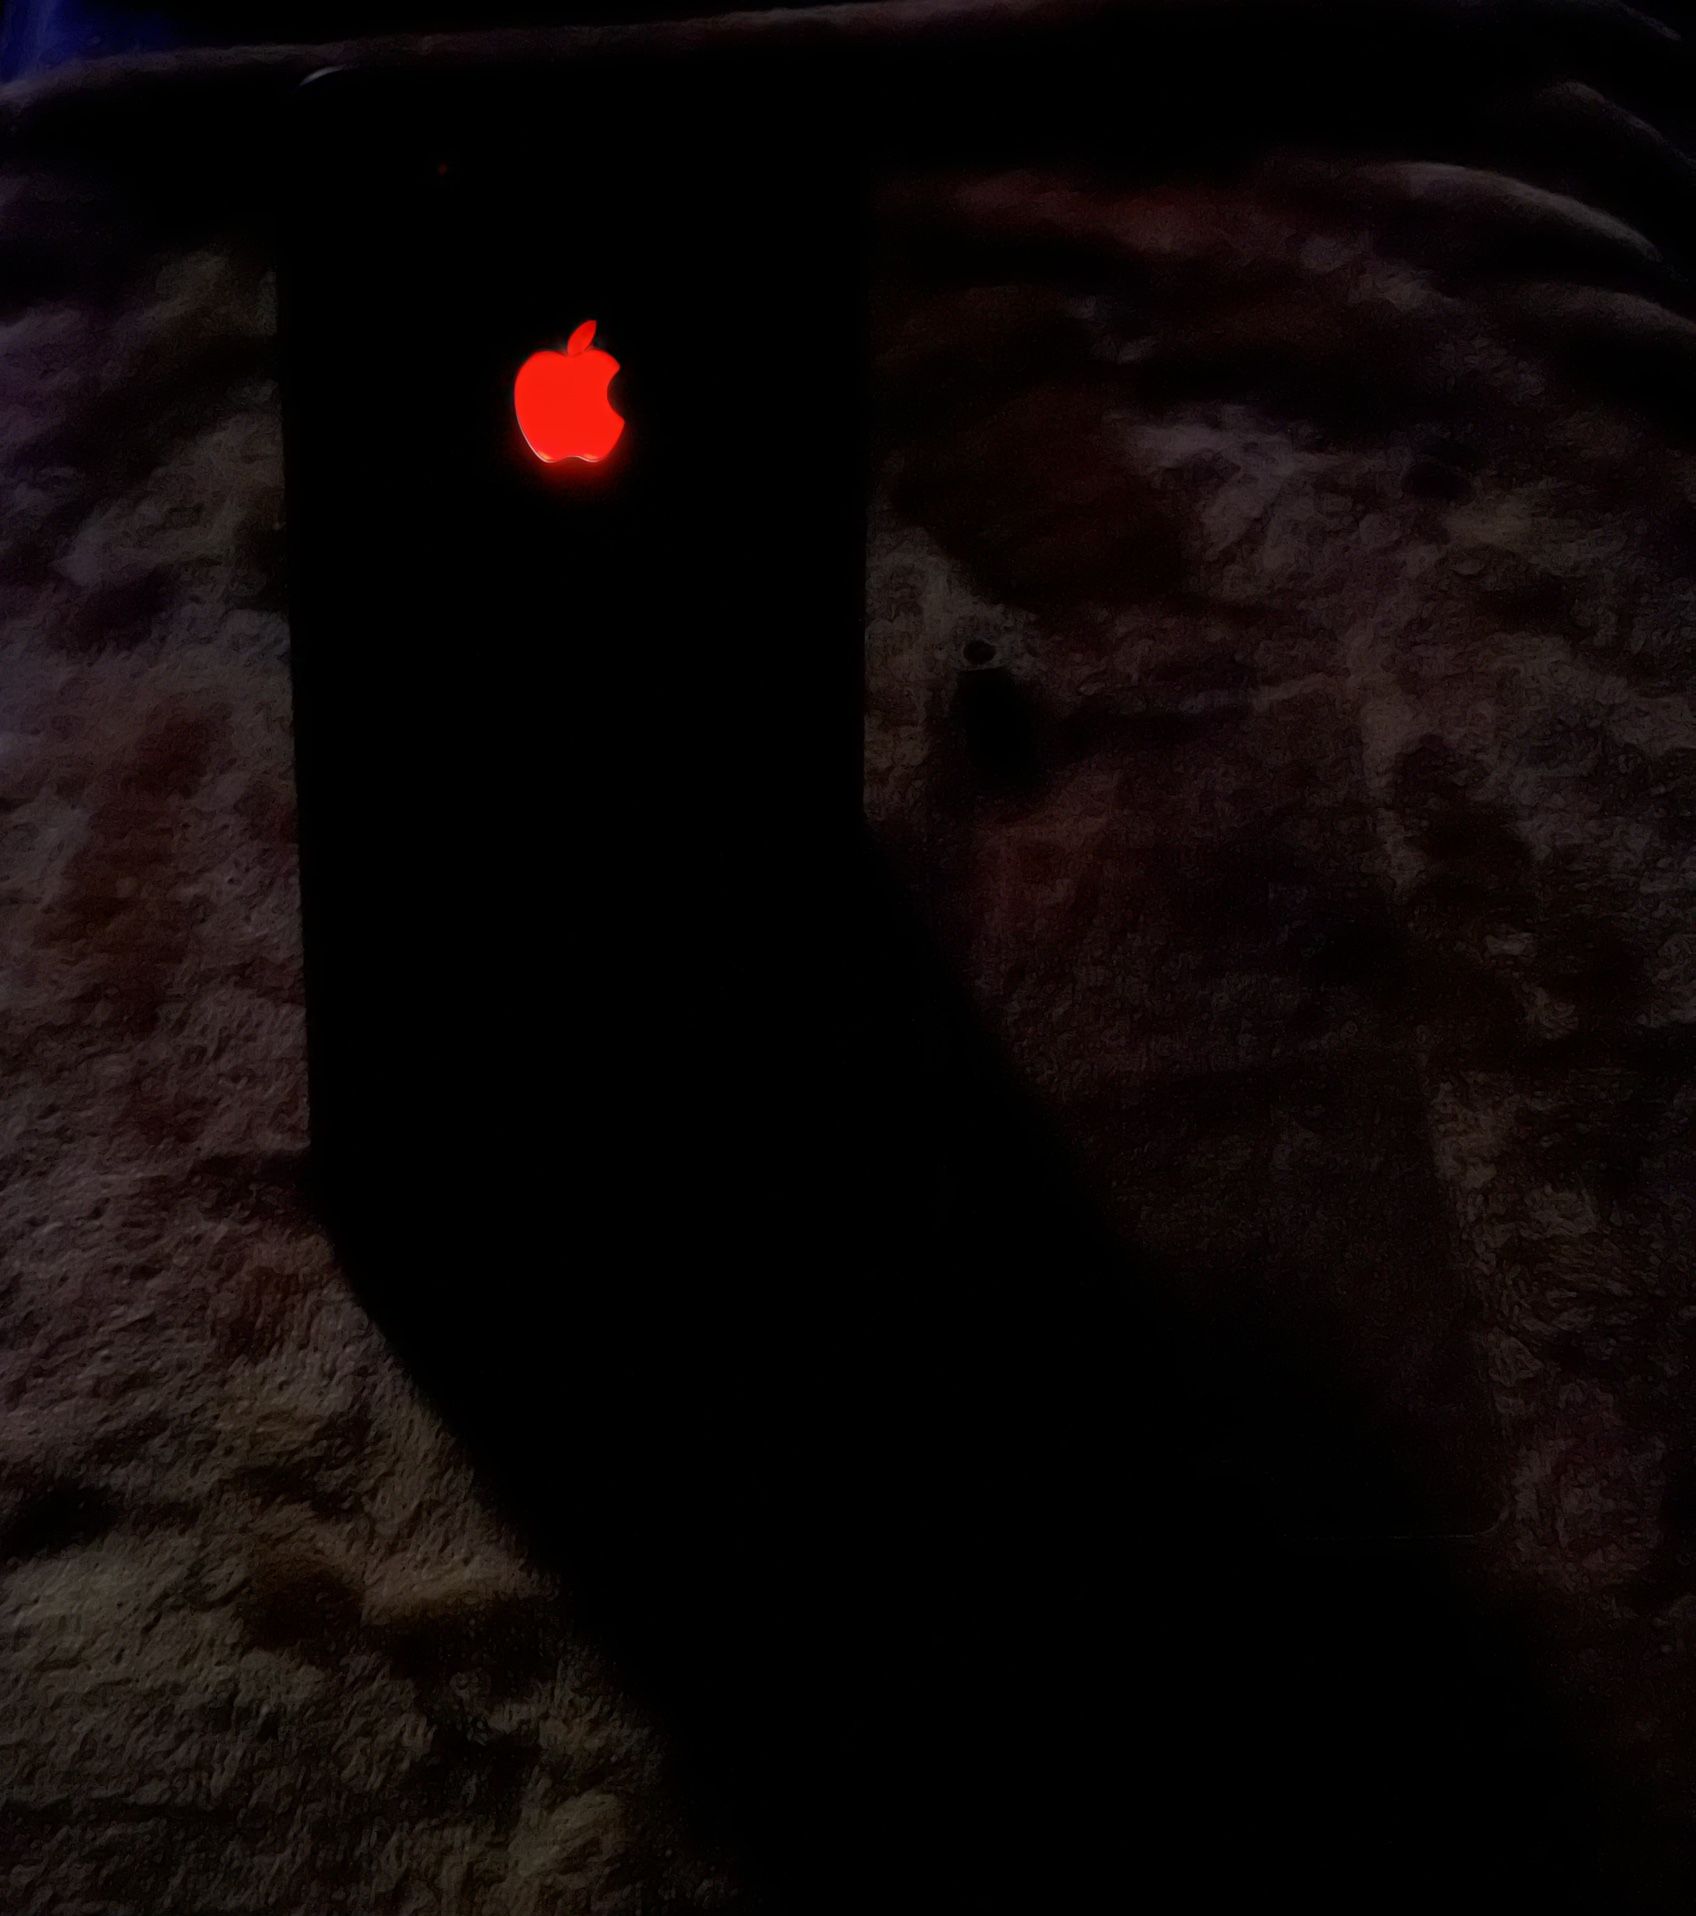 Custom Enhanced iPhone 7 Plus 128GB Red Unlocked A1661 CDMA + GSM